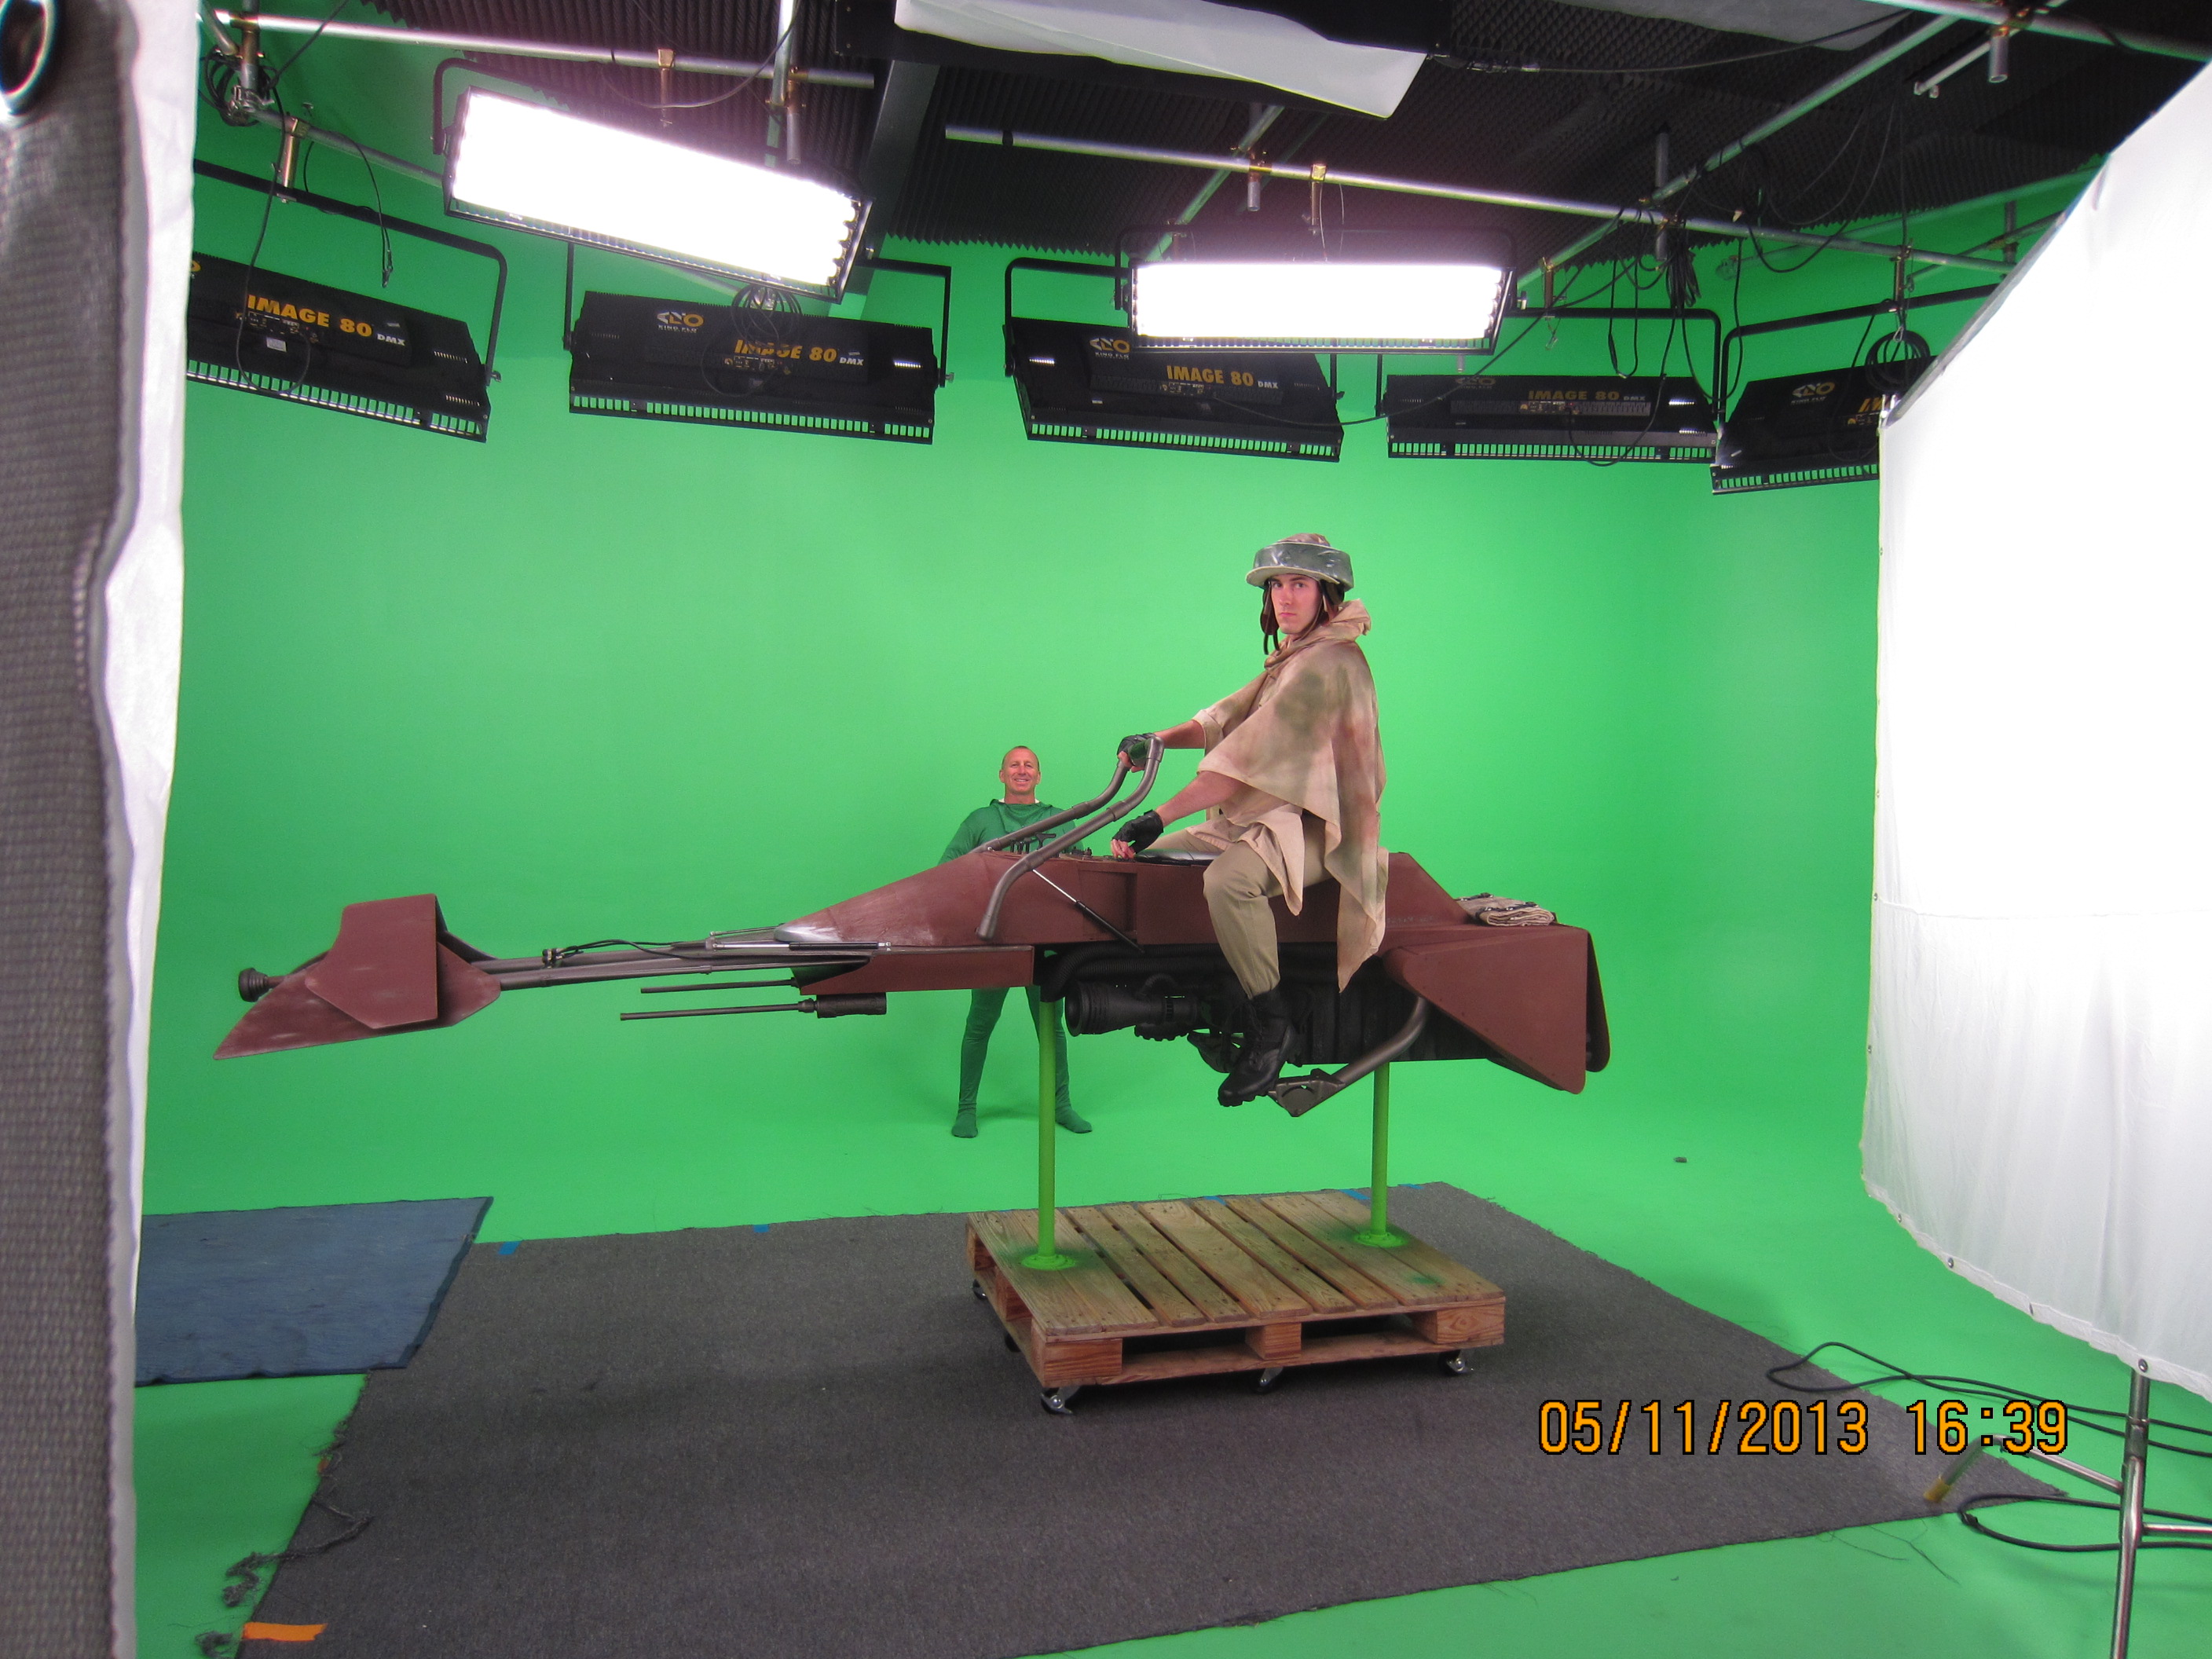 Star Wars Speeder Bike On Loyal Studios Burbank Green Screen